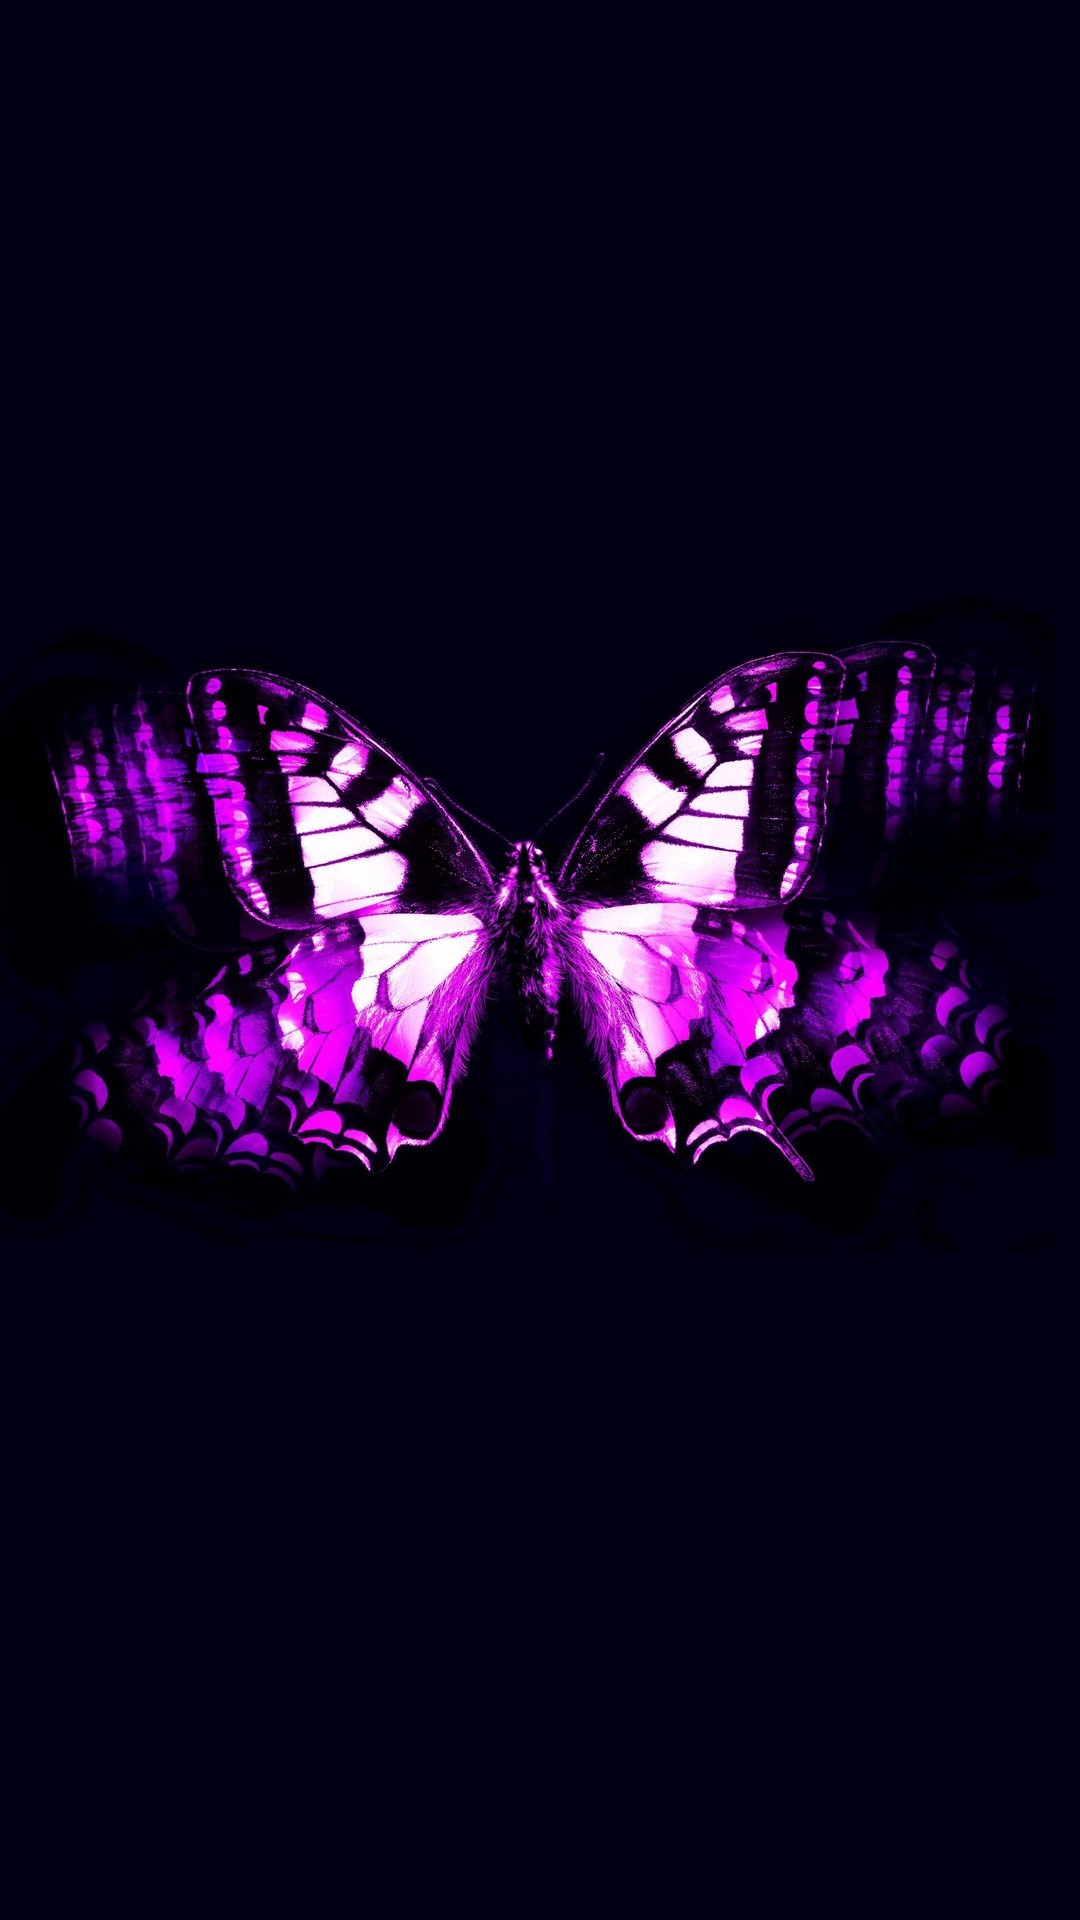 1080x1920 iPhone Wallpaper Purple Butterfly resolution 